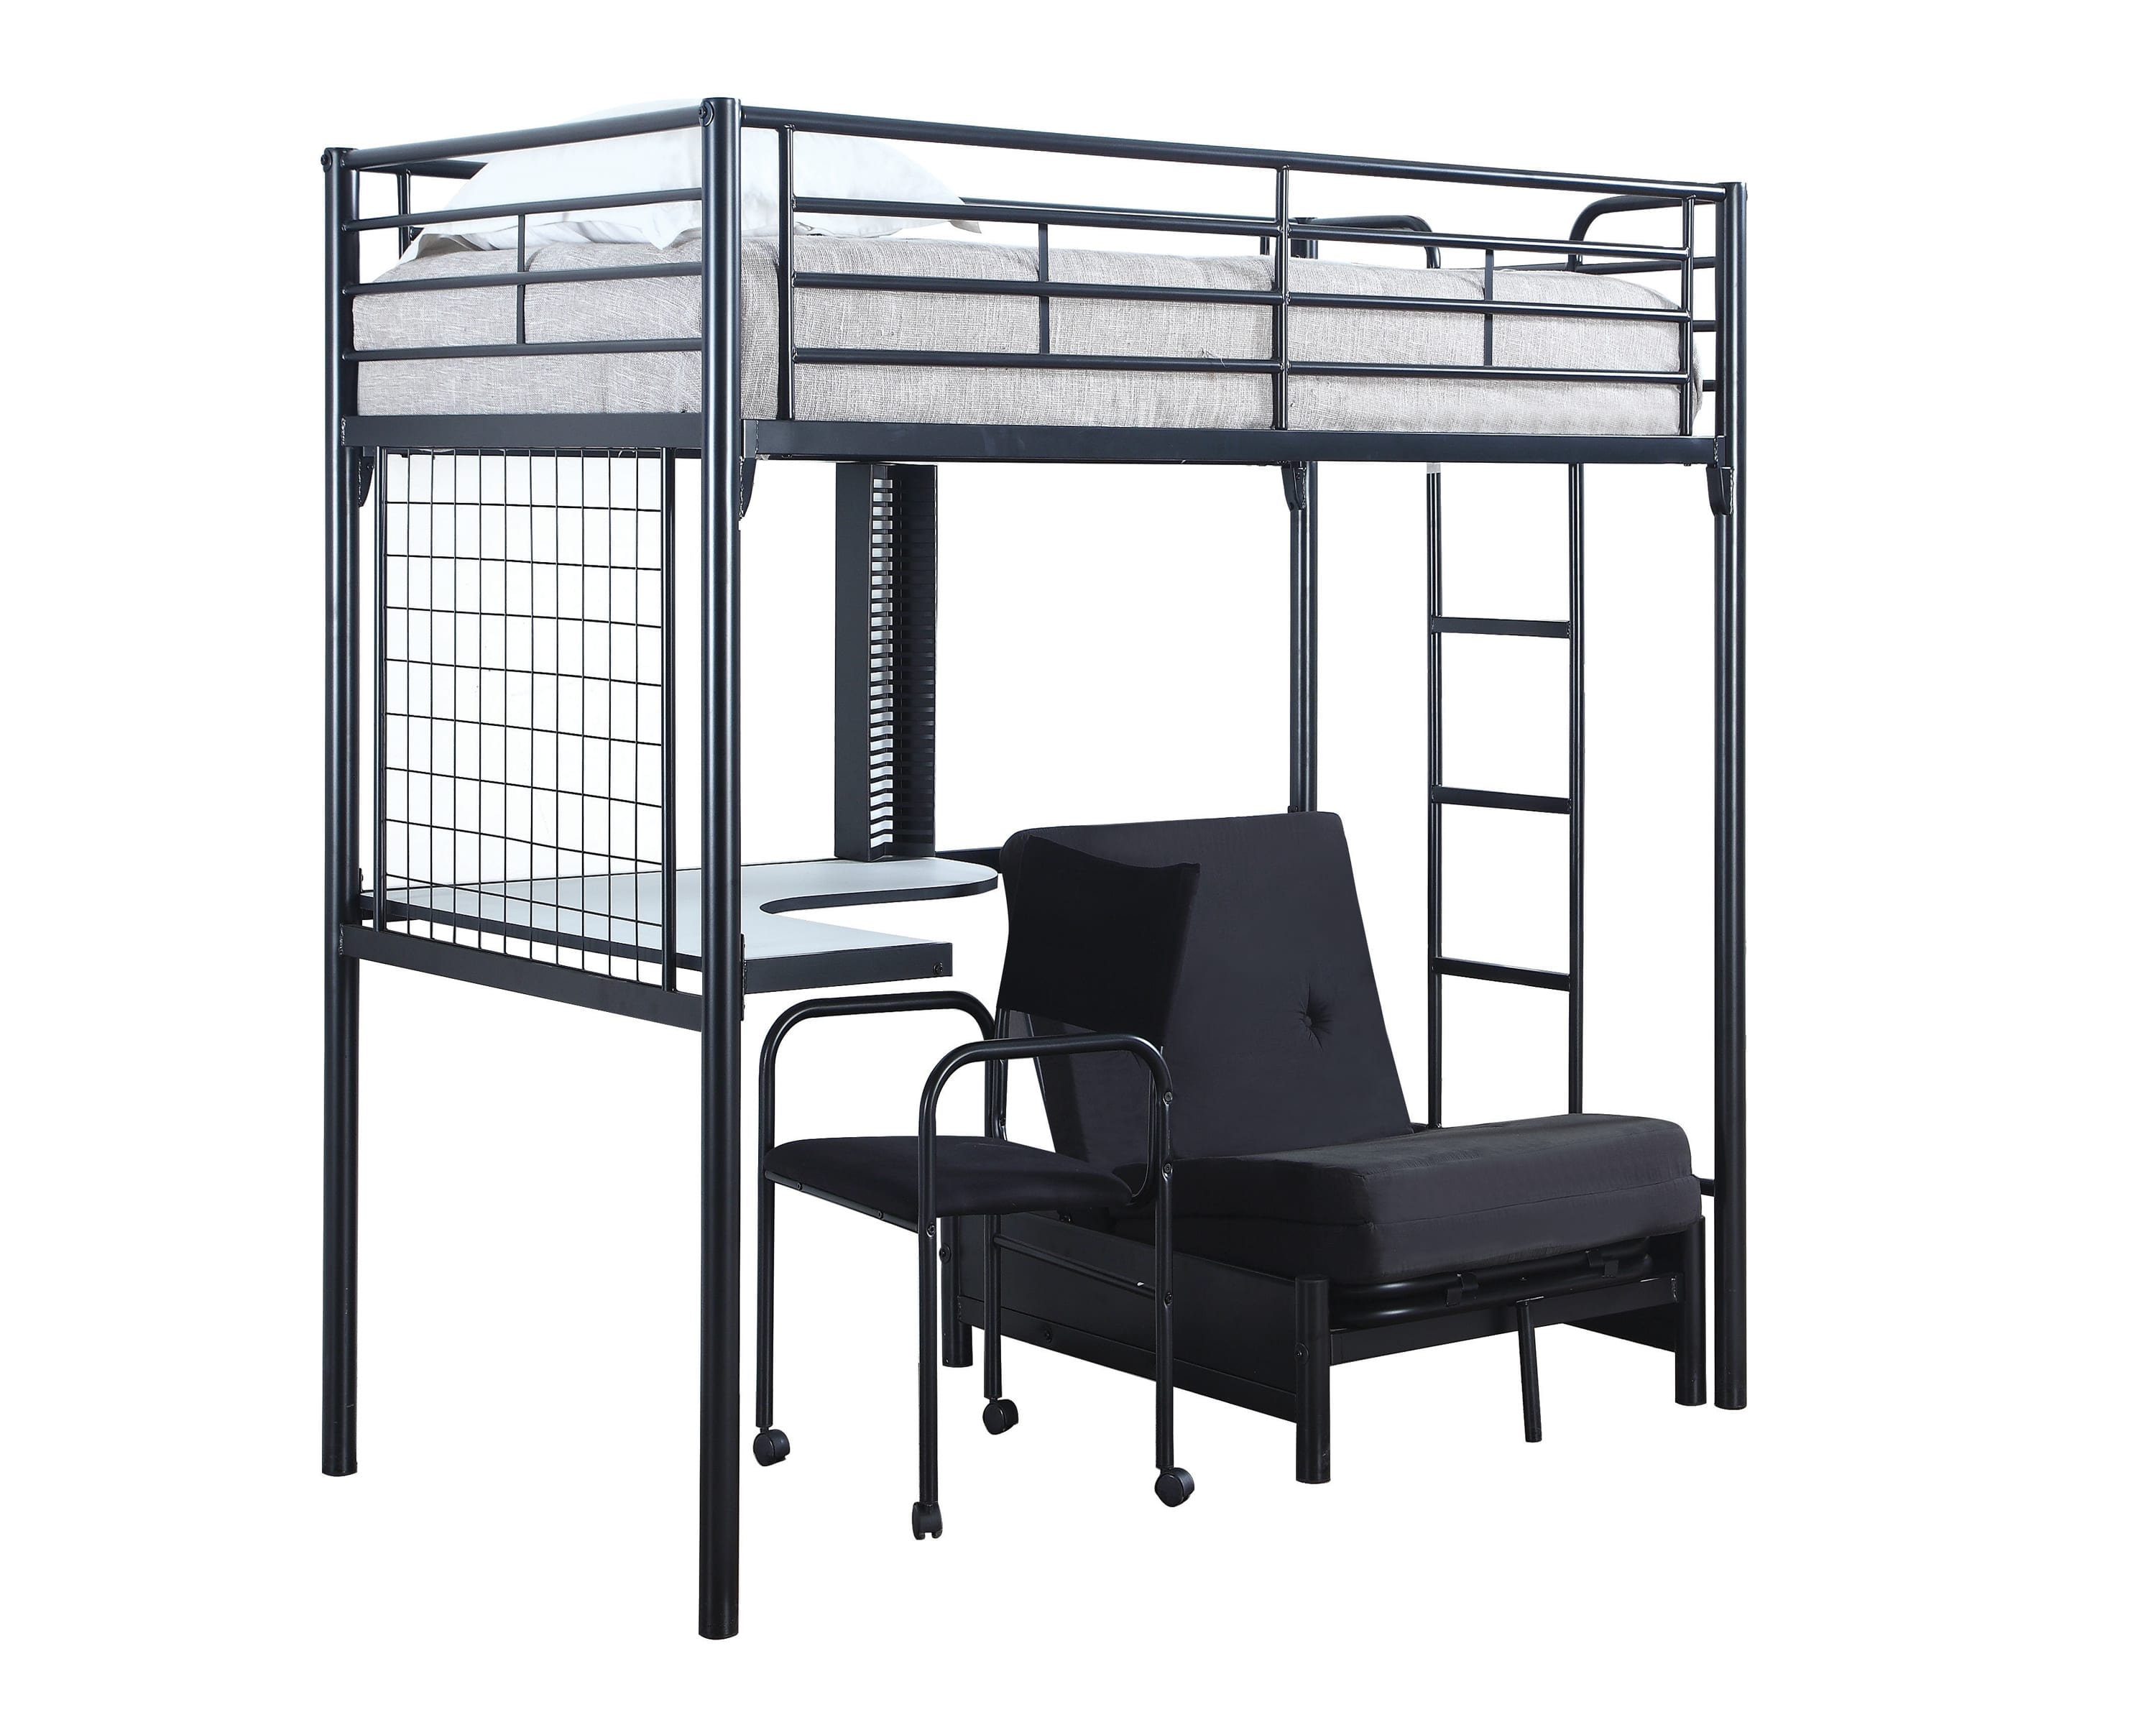 Jenner Futon Contemporary Metal Loft Bunk Bed w/Desk by Coaster